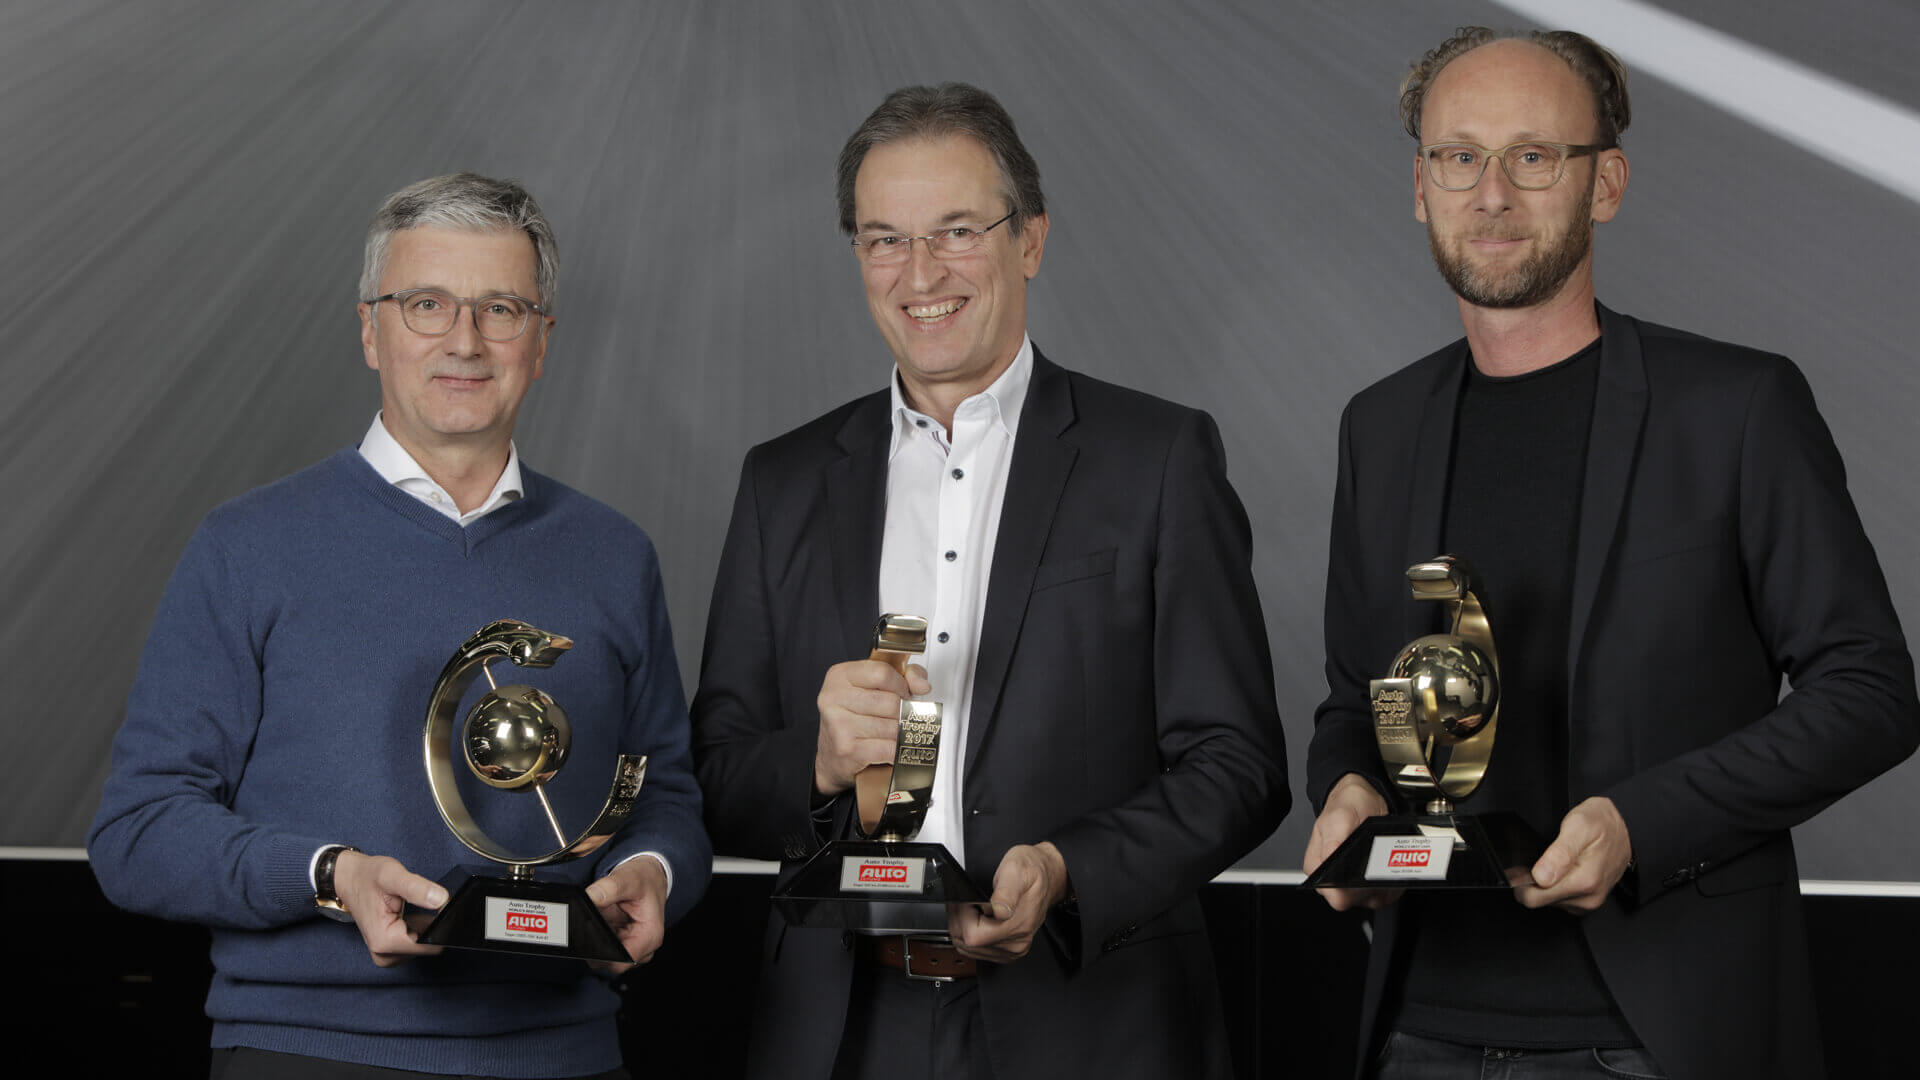 Volker-Koerdt-Editor-in-Chief-of-AUTO-ZEITUNG-(center),-Rupert-Stadler-(left)-Marc-Lichte-(right)-1920x1080.jpg